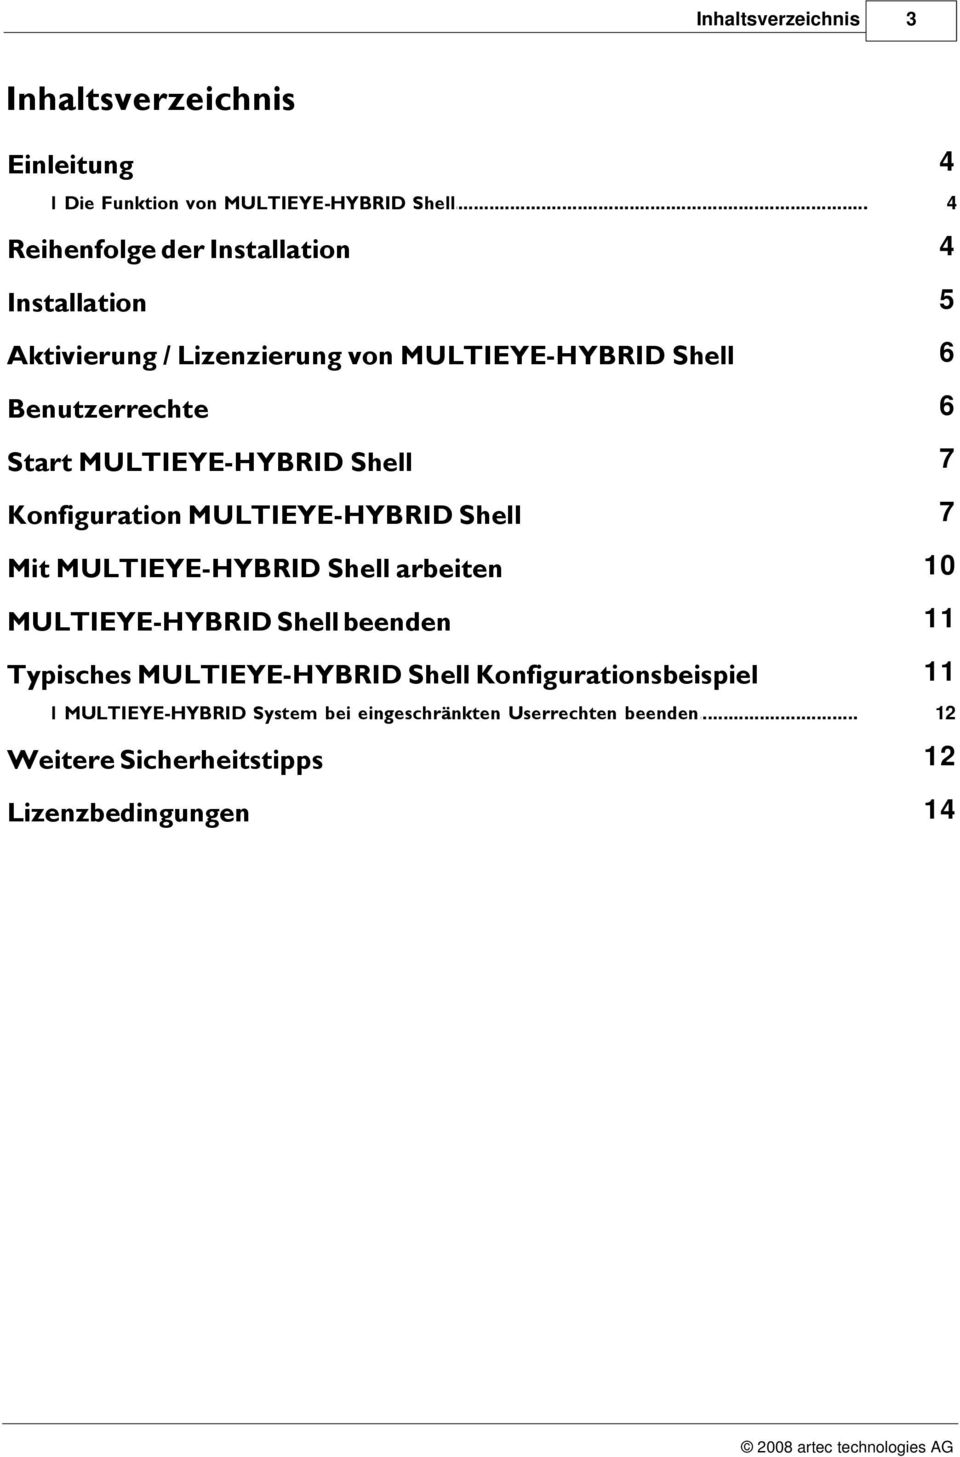 Benutzerrechte 6 Start MULTIEYE-HYBRID Shell 7 Konfiguration MULTIEYE-HYBRID Shell 7 Mit MULTIEYE-HYBRID Shell arbeiten 10